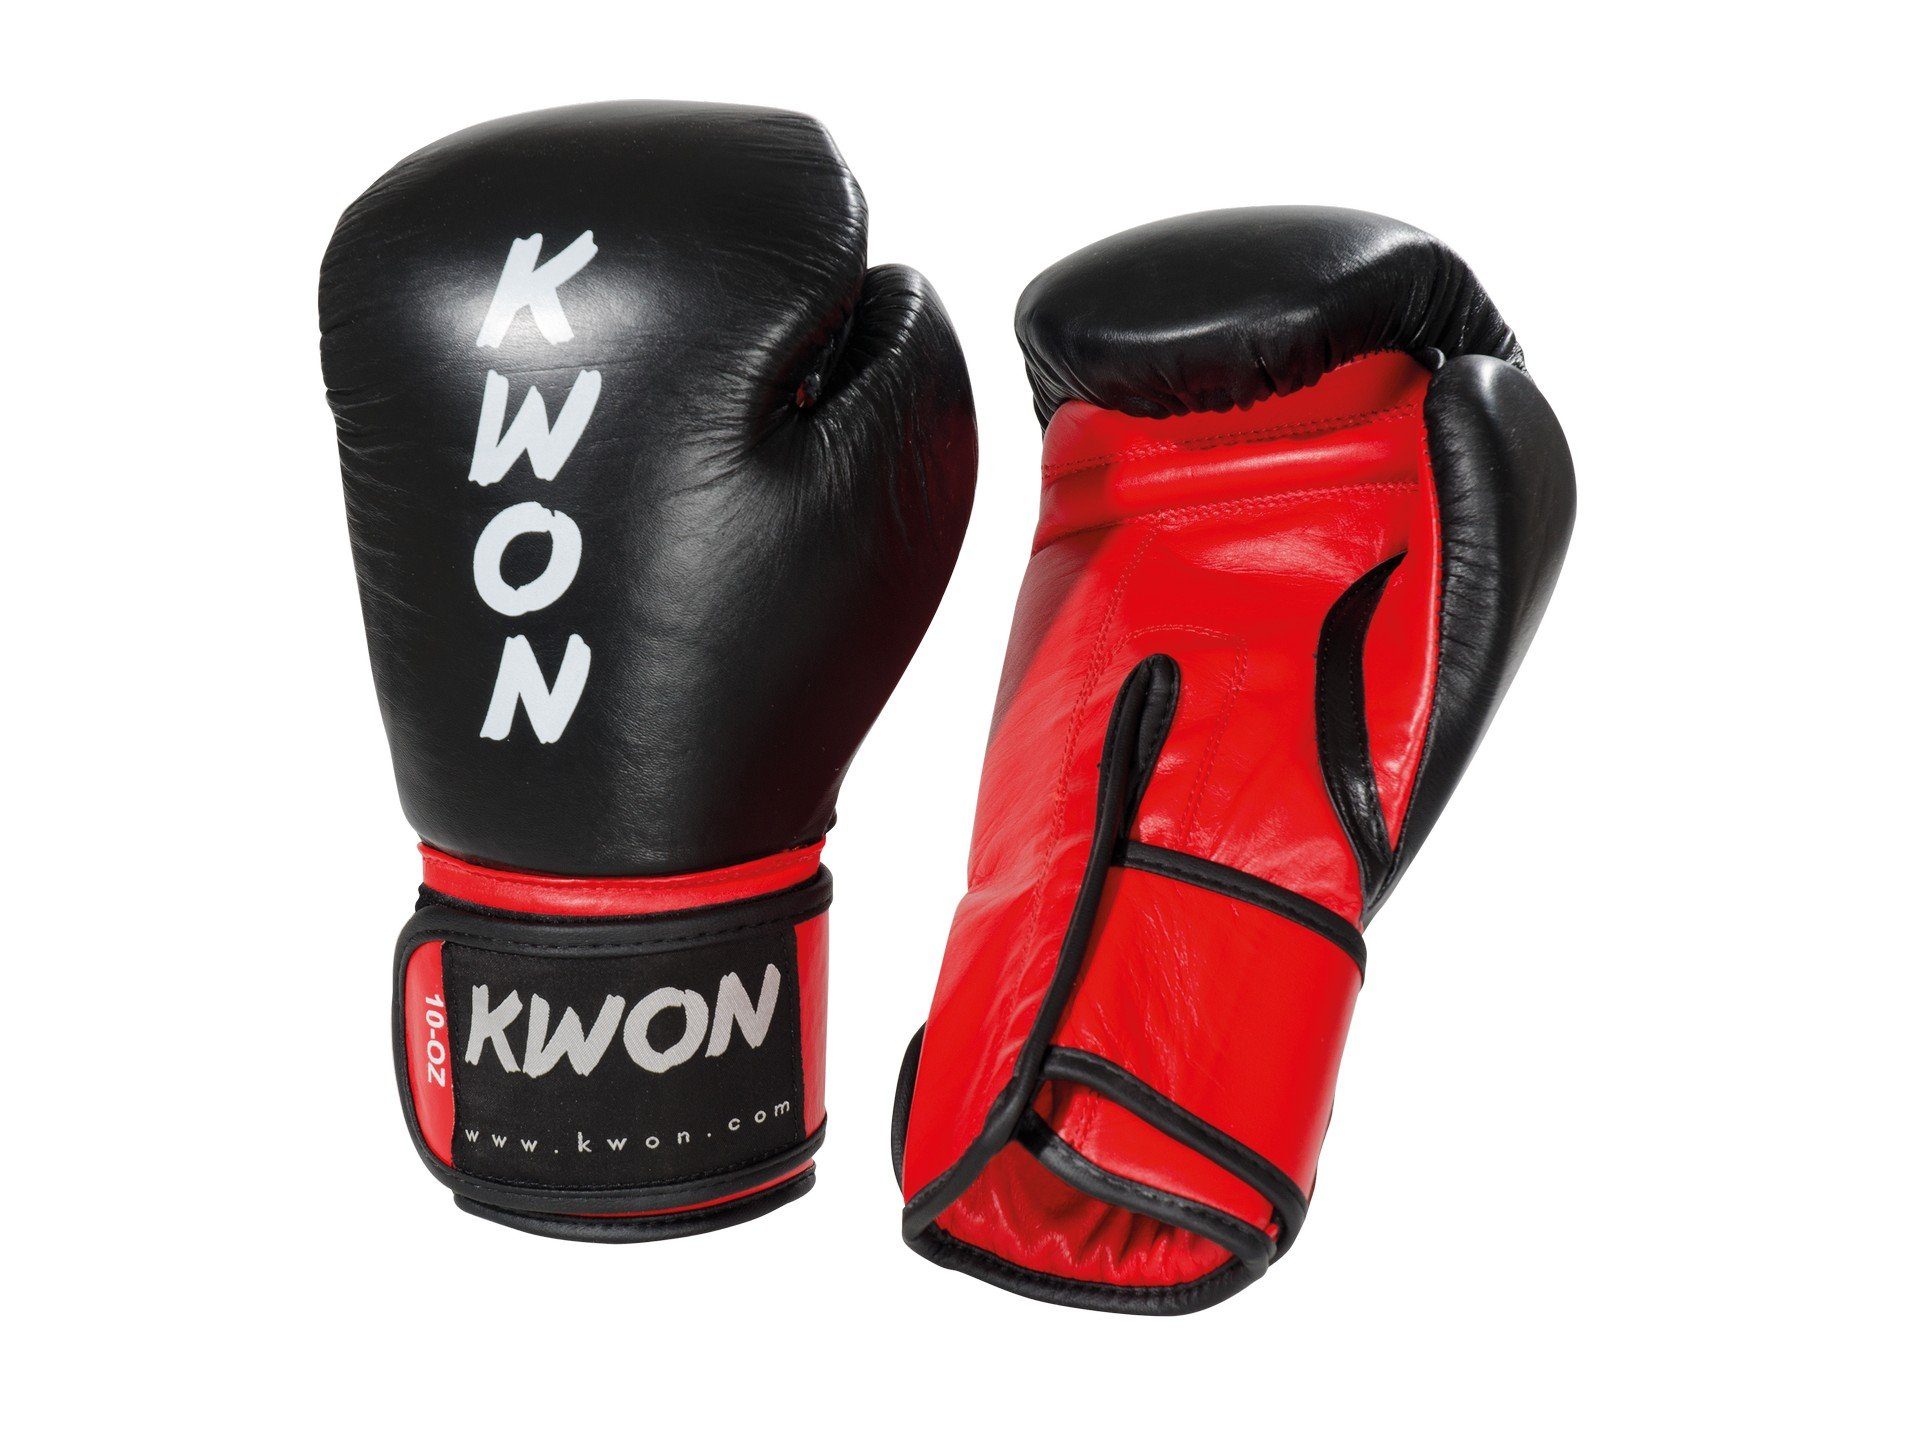 KWON Boxhandschuhe Profi KO Thaiboxen (Vollkontakt, Leder, Leder schwarz/gelb Paar), Form, Kickboxen Champ Box-Handschuhe anerkannt Boxen Profi WKU Echtes Ergo Ausführung